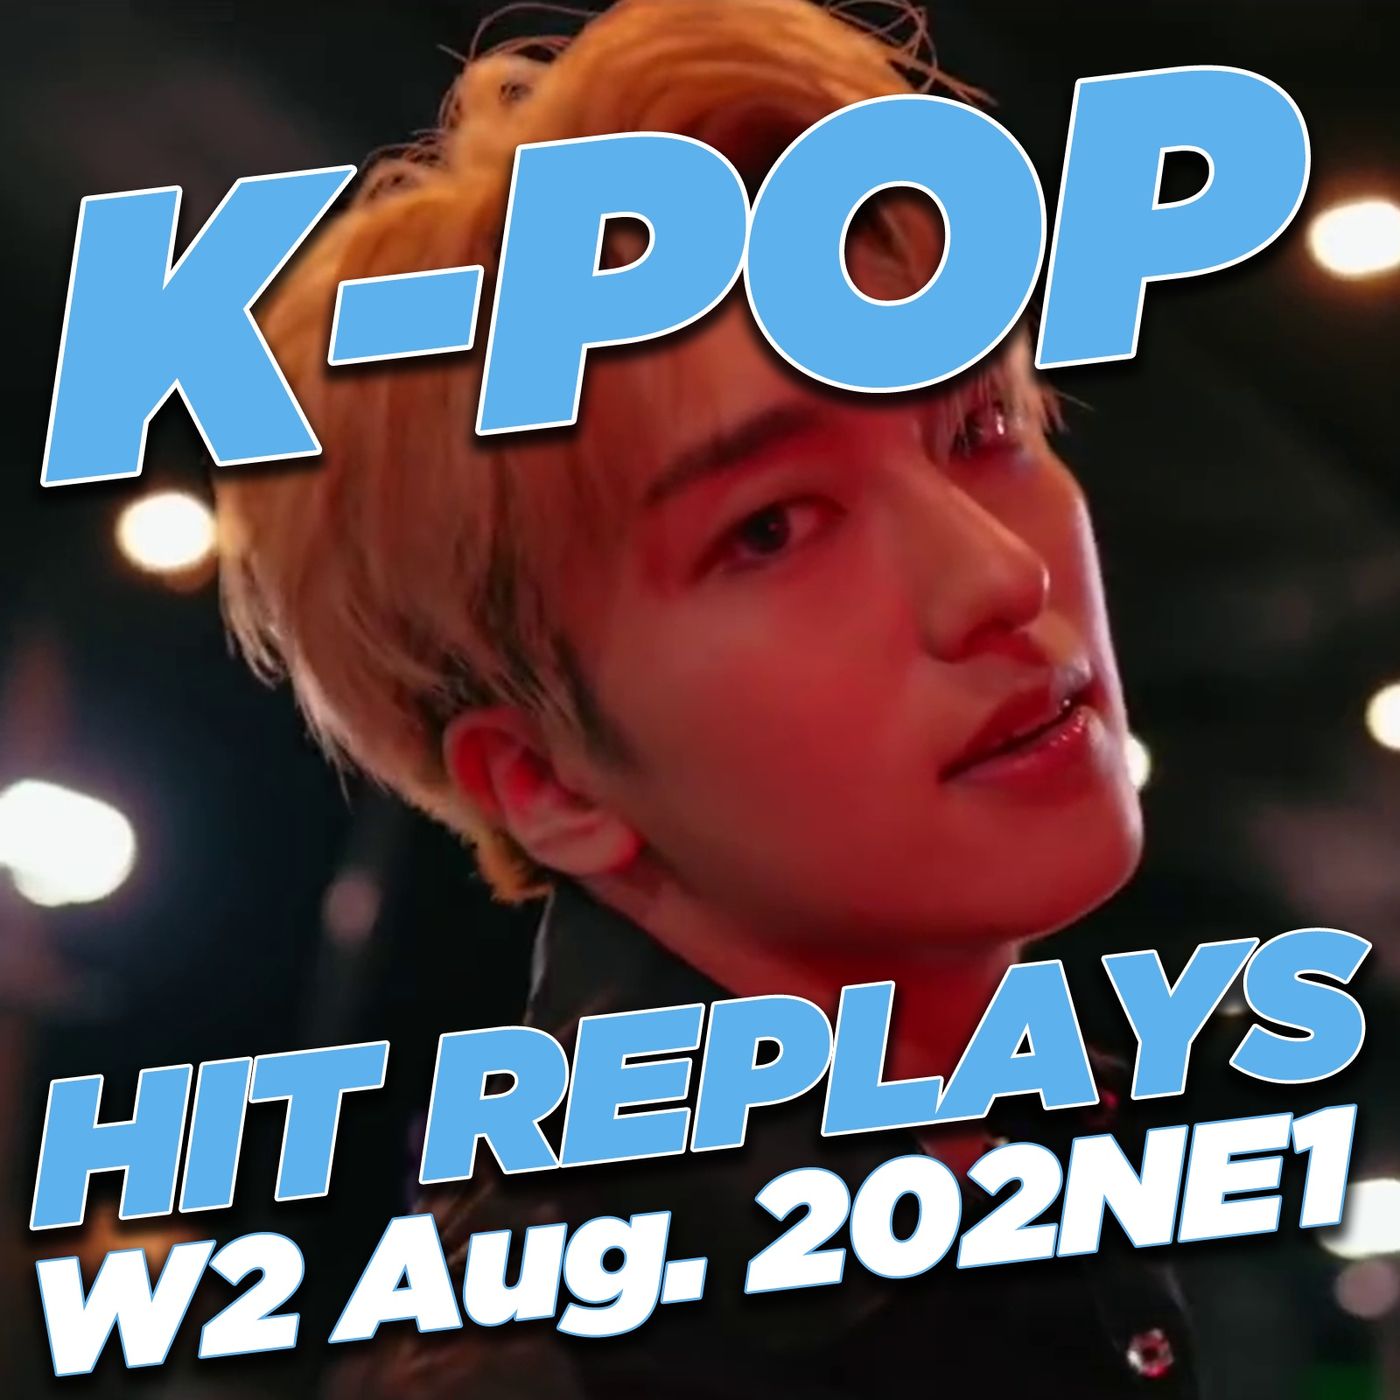 K-pop Hit Replays: NADA, DOHU, D.O., OMEGA X - W2 Aug. 202NE1